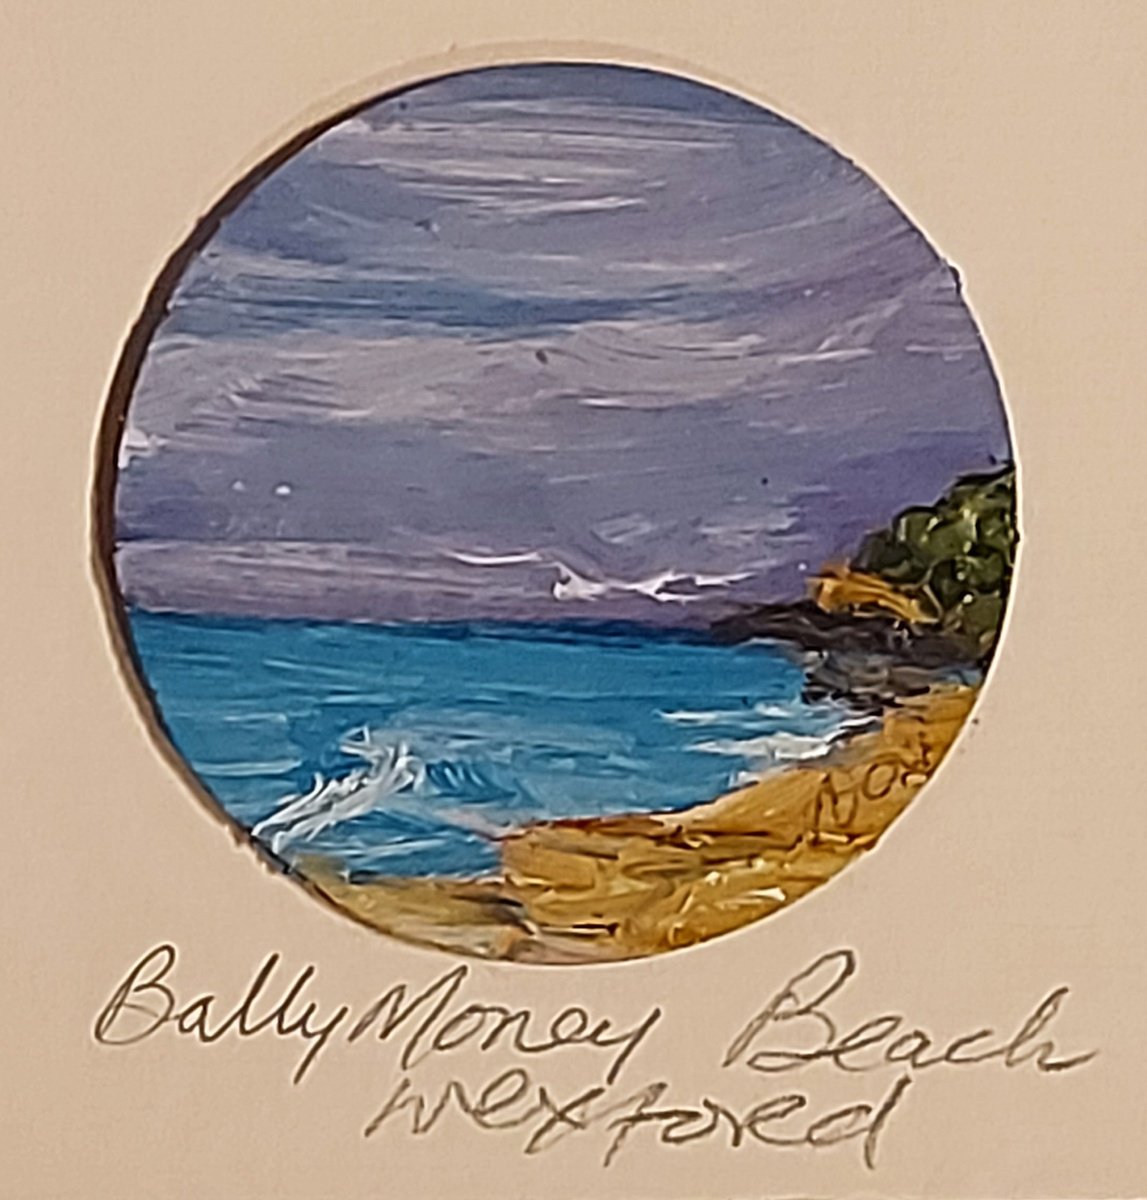 Twilight Ballymoney Beach - a mini painting by Niki Purcell